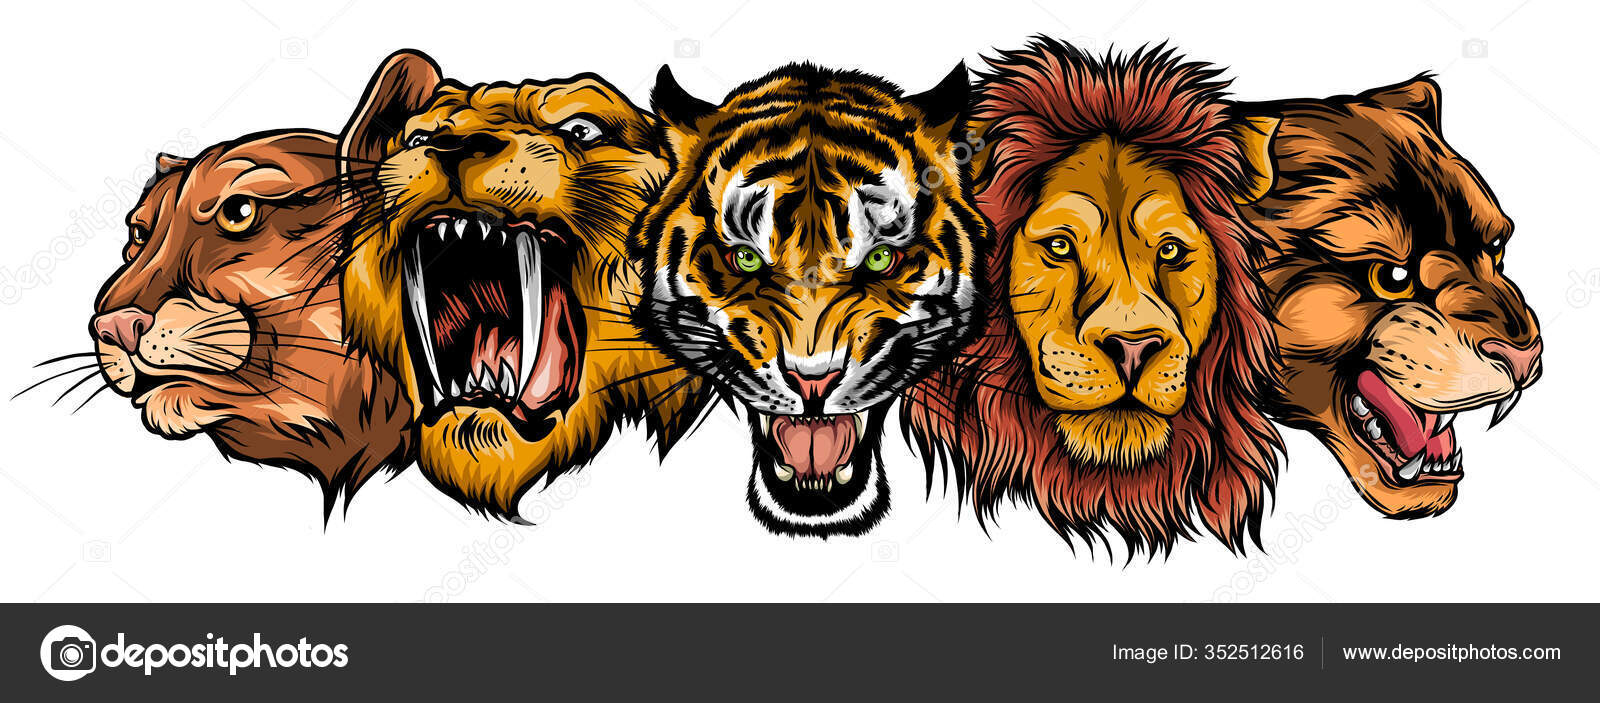 Lion Head Face Wild Animal Wildlife Jungle Cartoon School Team Sport Mascot Tattoo Art Company Design Logo SVG PNG Clipart Vector Cut File